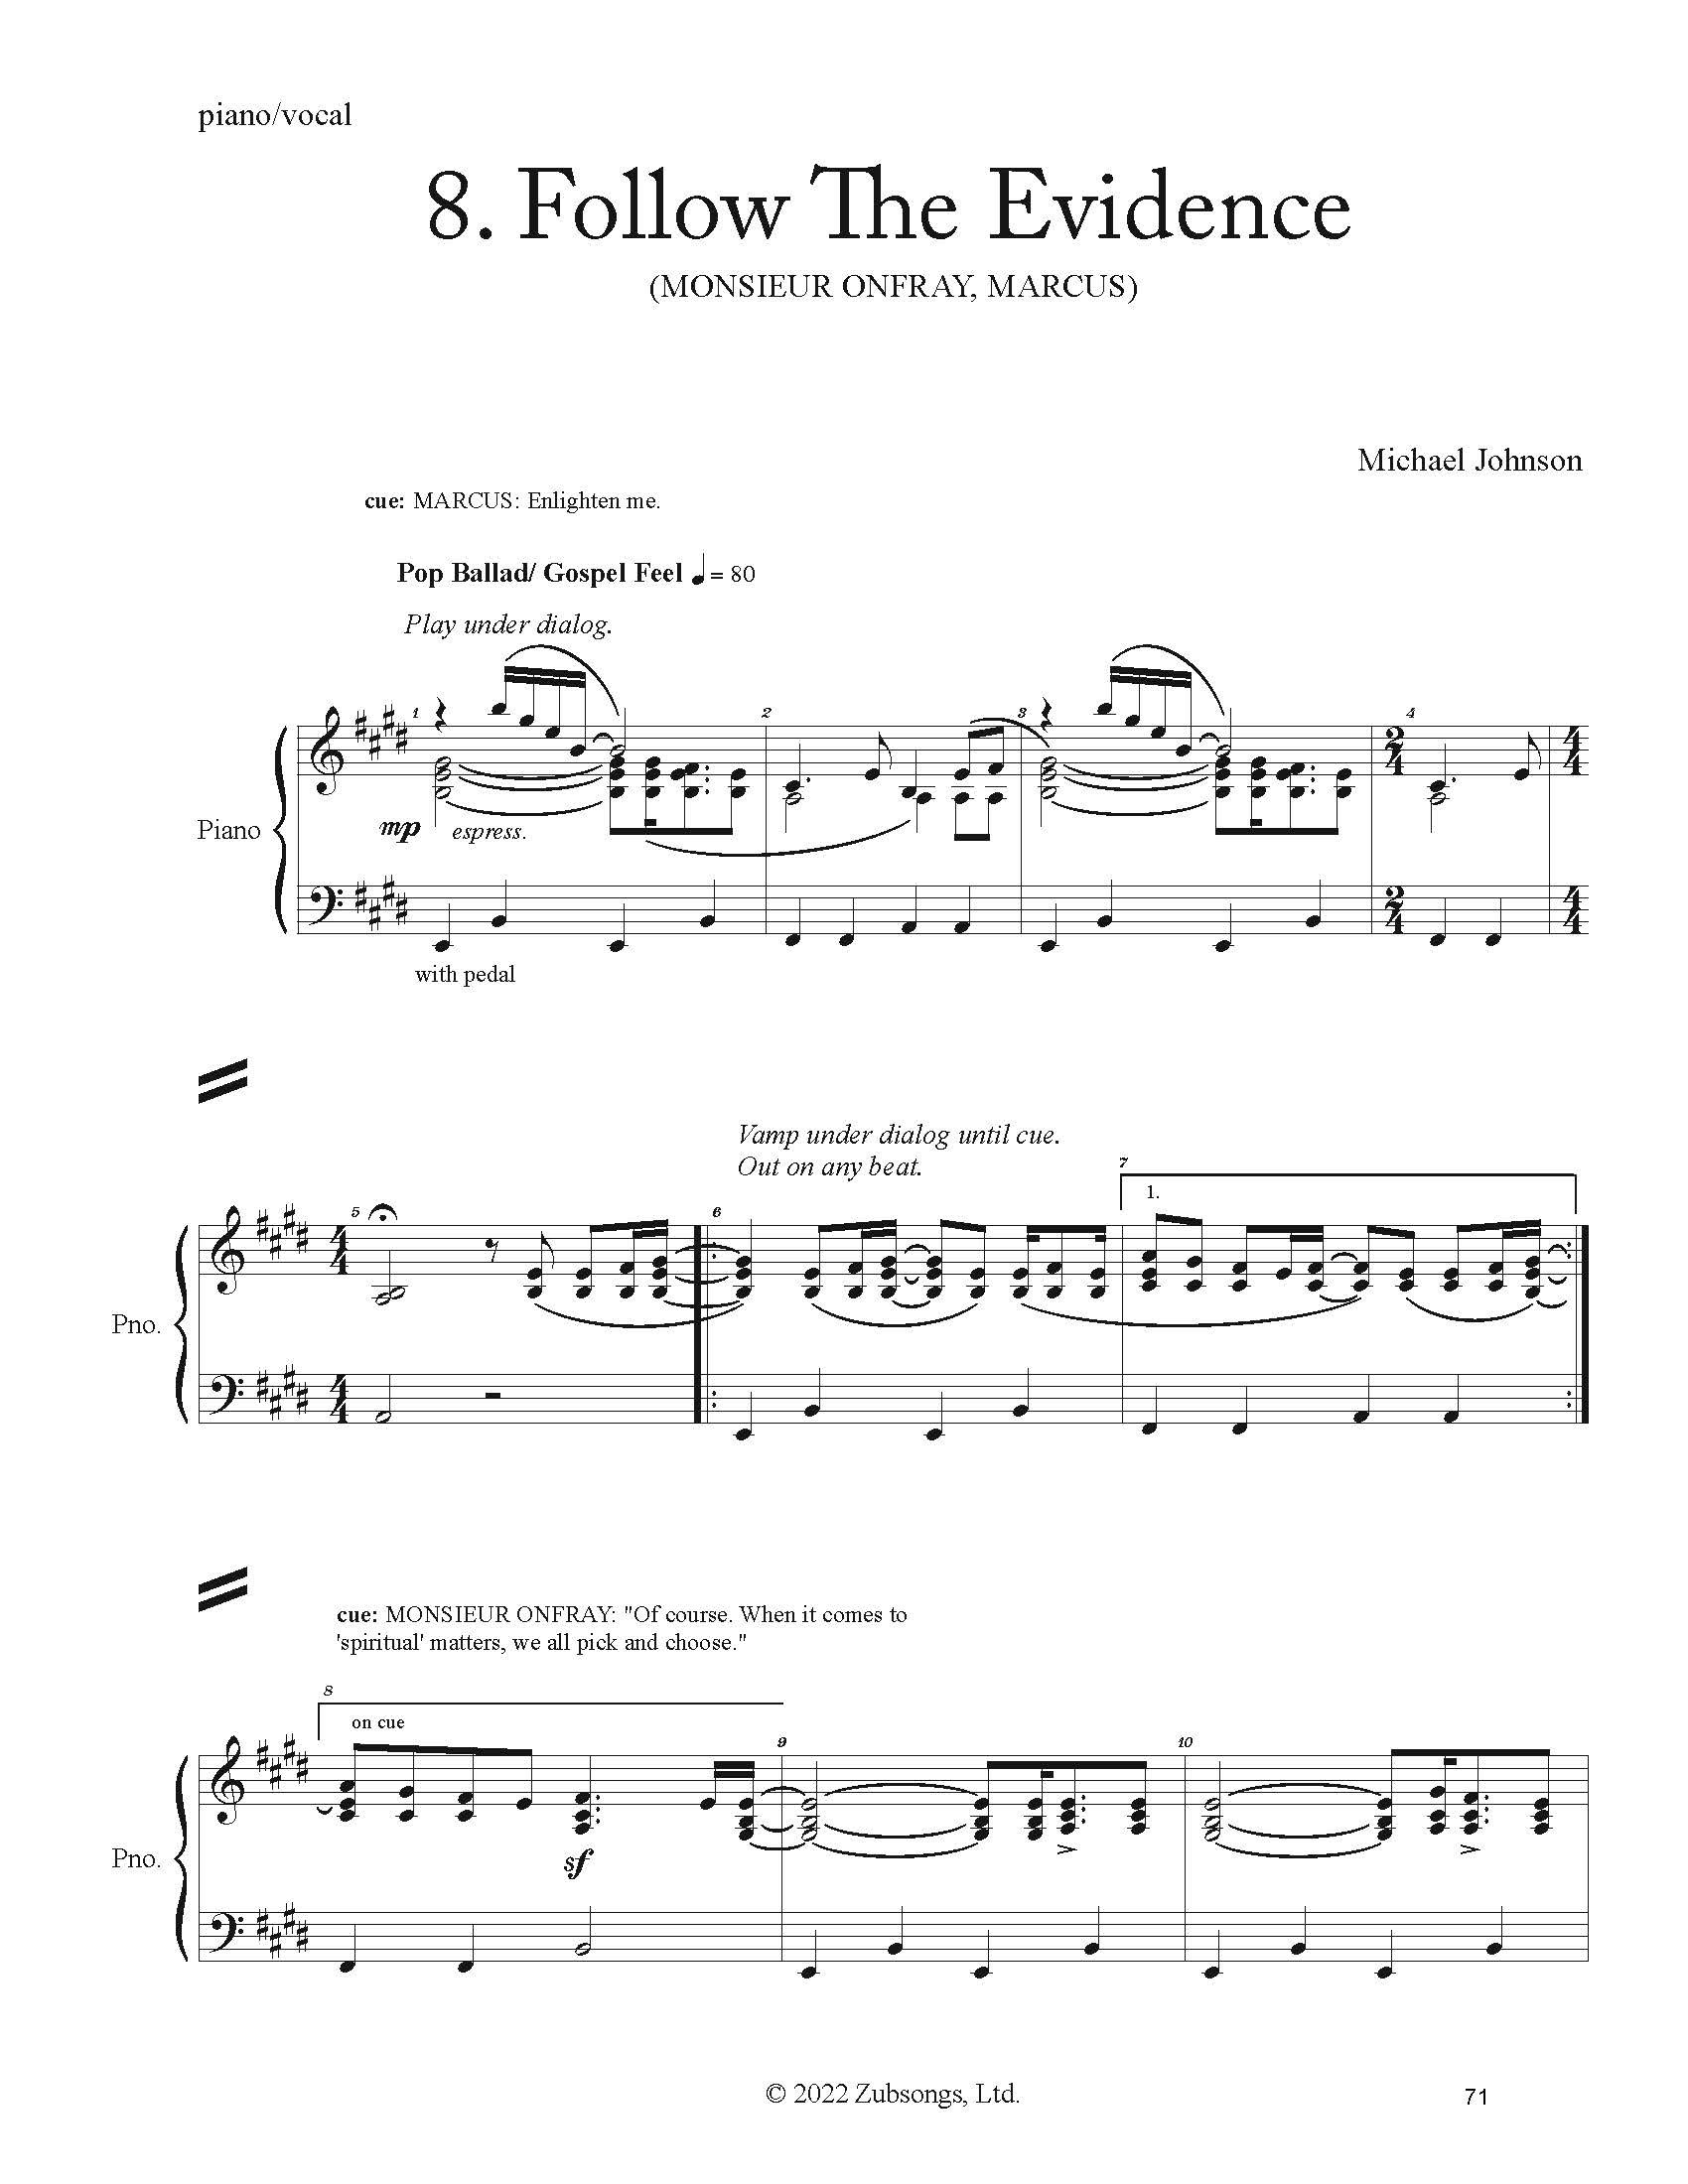 FULL PIANO VOCAL SCORE DRAFT 1 - Score_Page_071.jpg